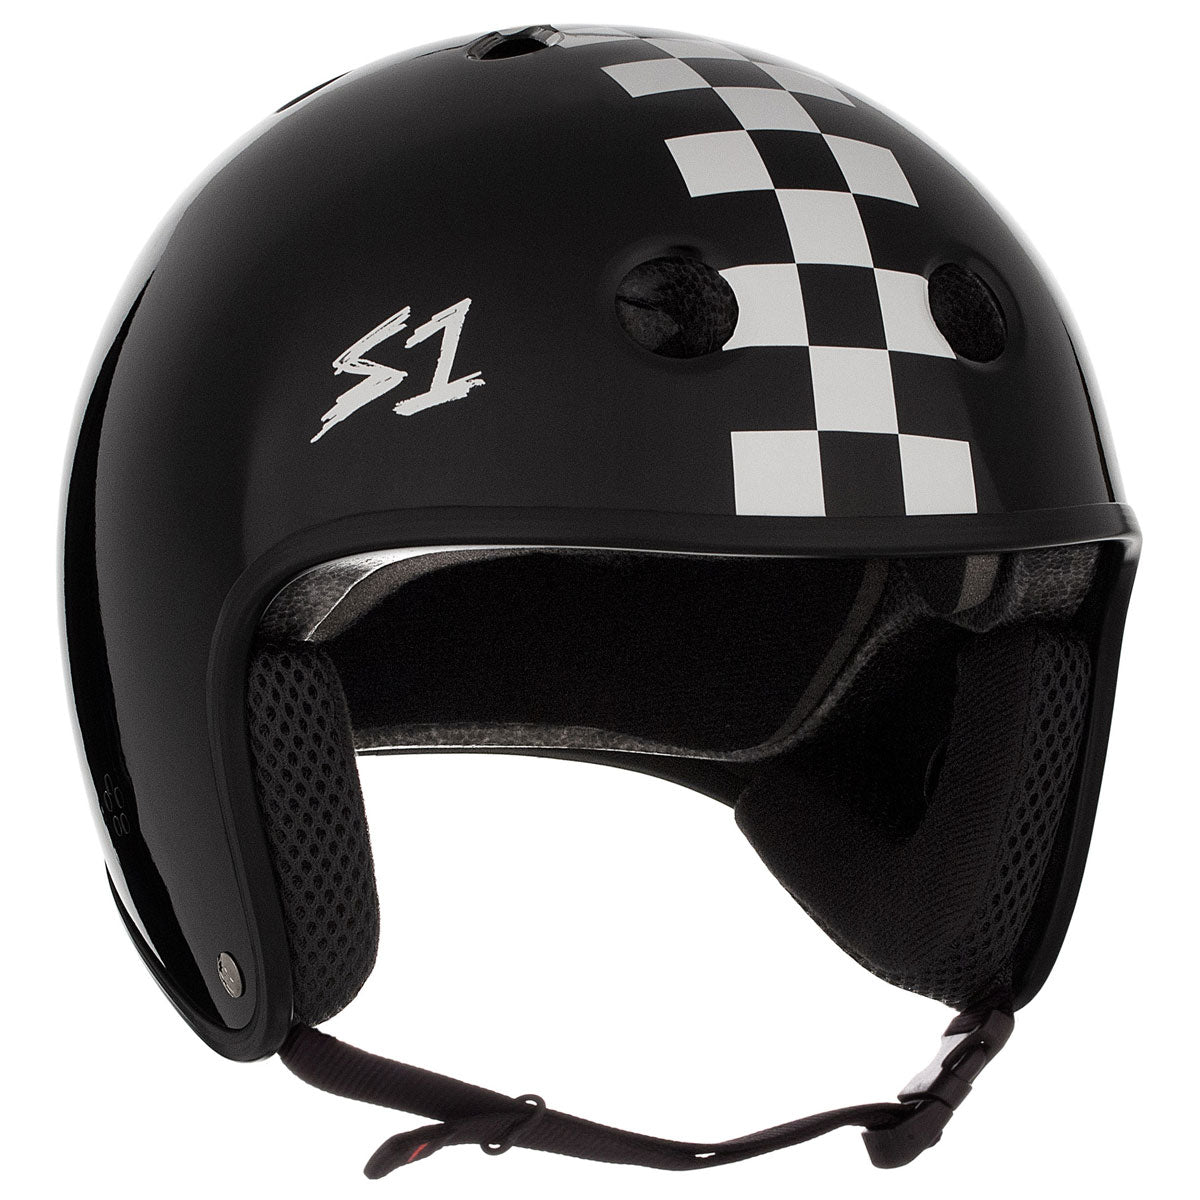 S-One Lifer Retro Helmet - Black Matte Checkers image 1